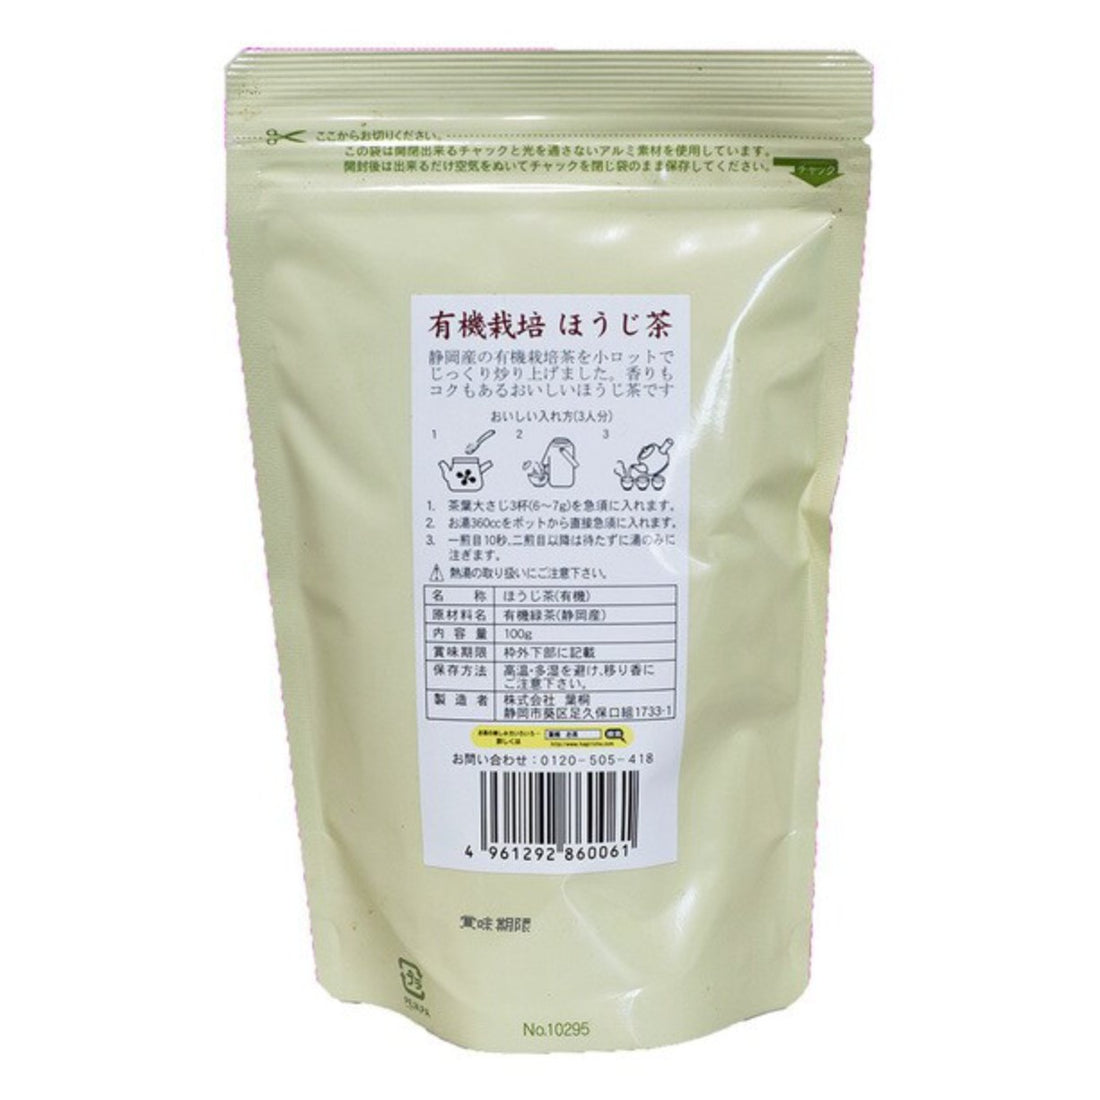 Hagiri JAS organically grown roasted green tea 100g - NihonMura